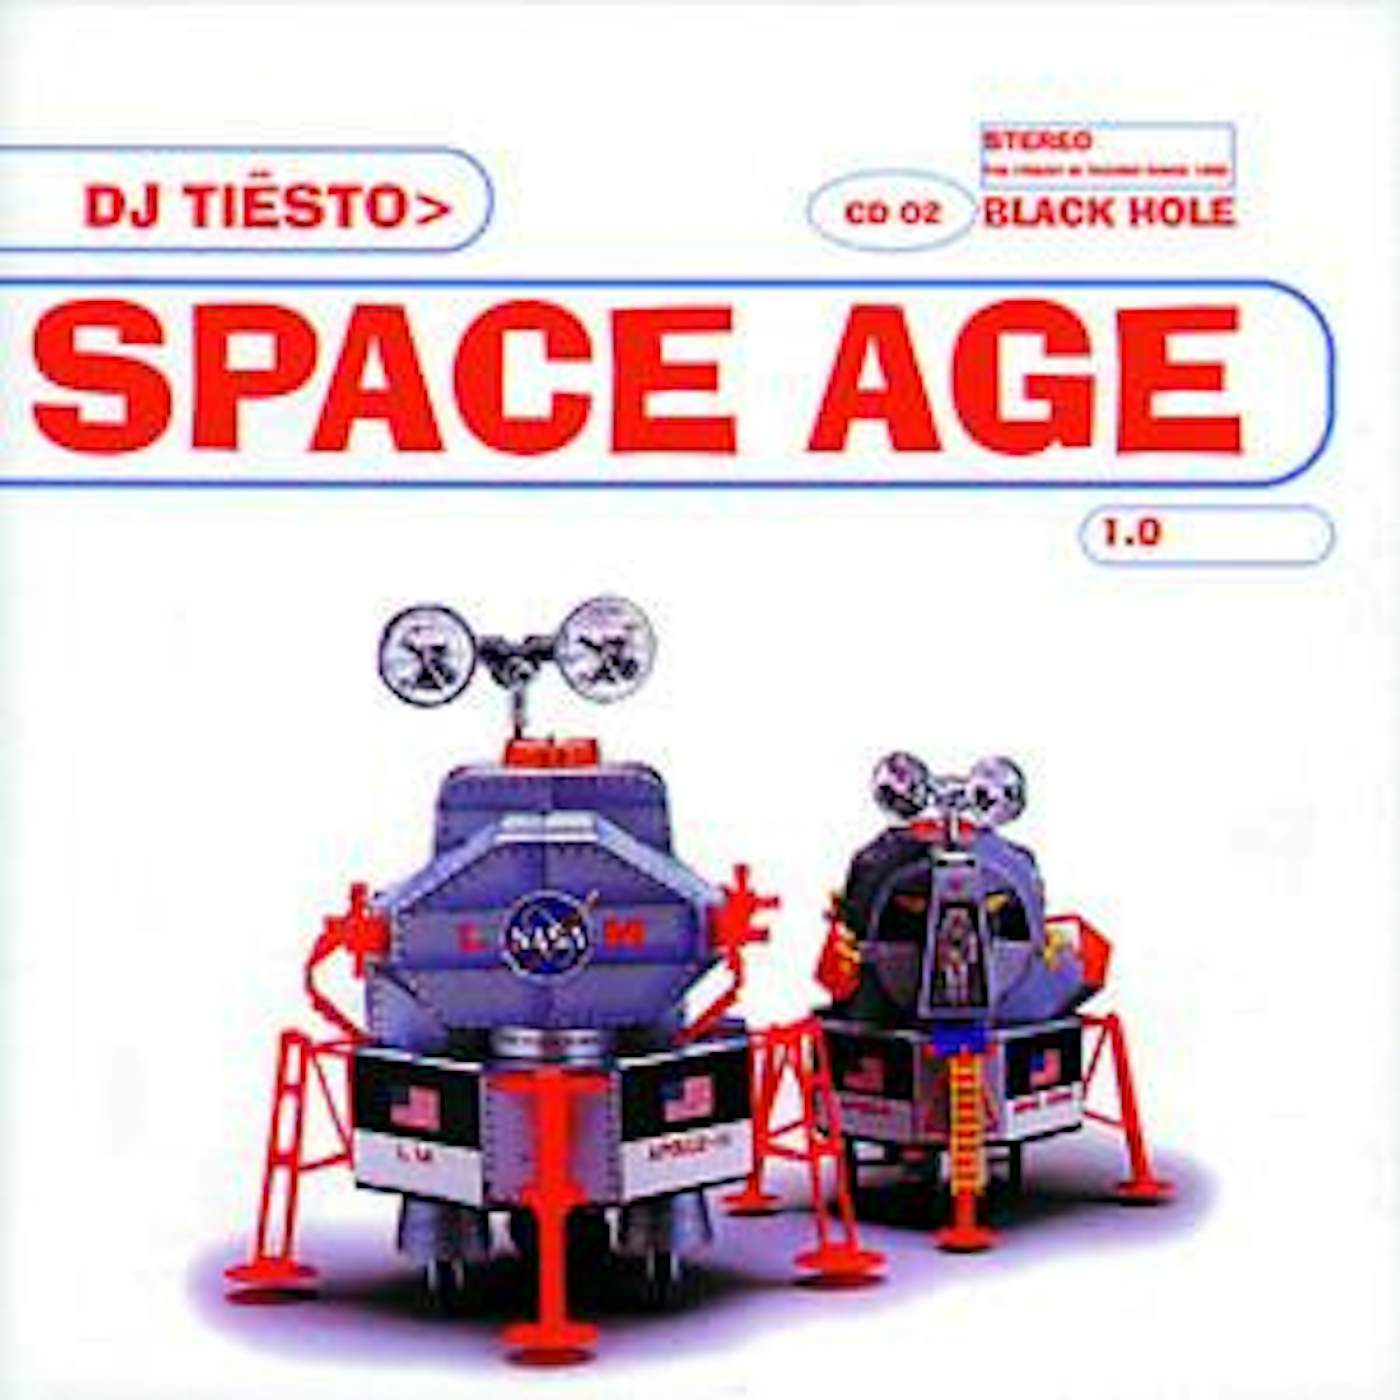 Tiësto - Space Age 1.0 CD